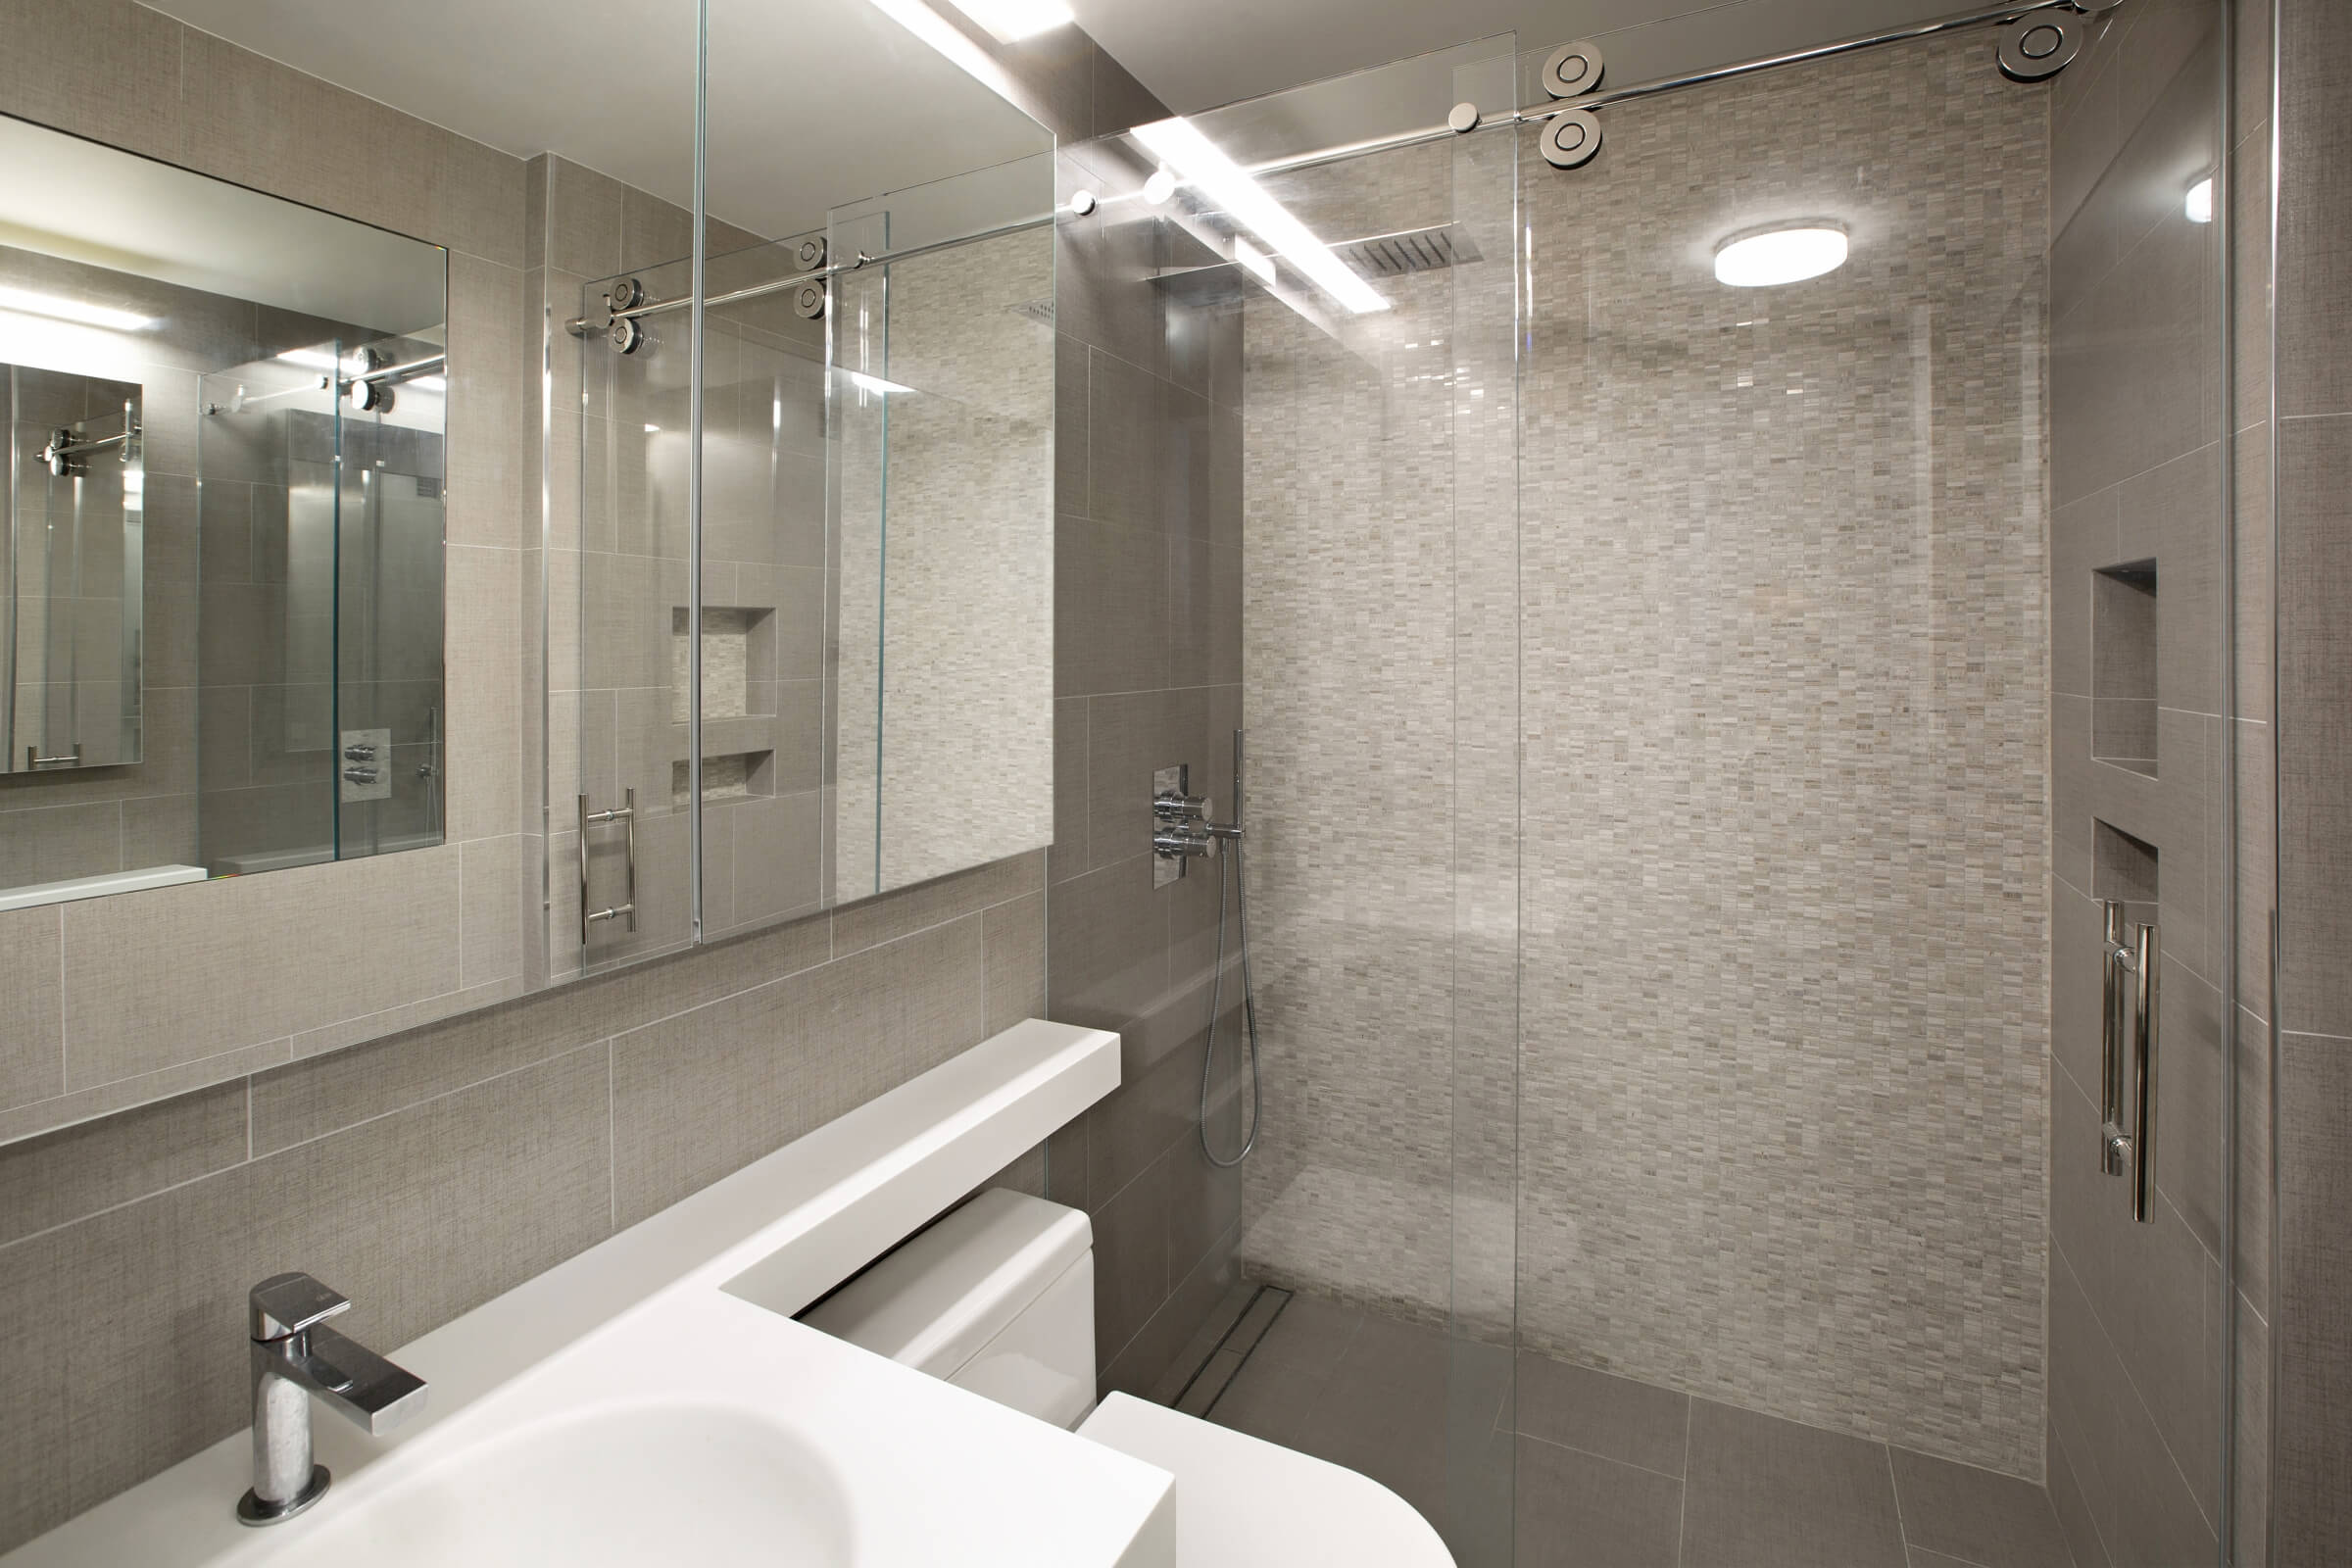 Worldwise Plaza bathroom renovation | Francis Interiors